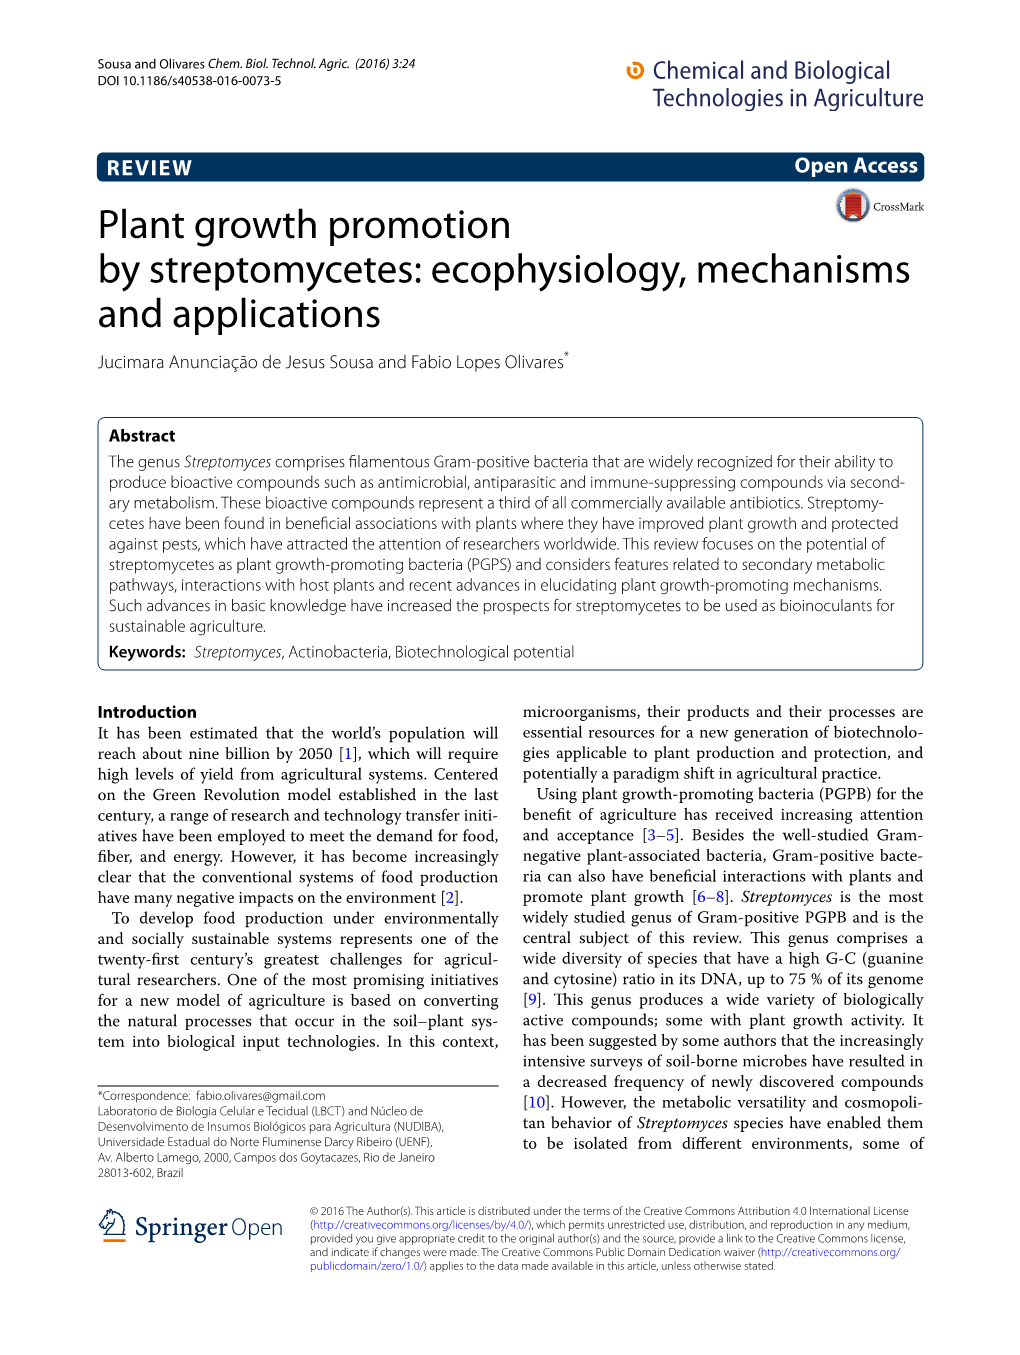 Plant Growth Promotion by Streptomycetes: Ecophysiology, Mechanisms and Applications Jucimara Anunciação De Jesus Sousa and Fabio Lopes Olivares*